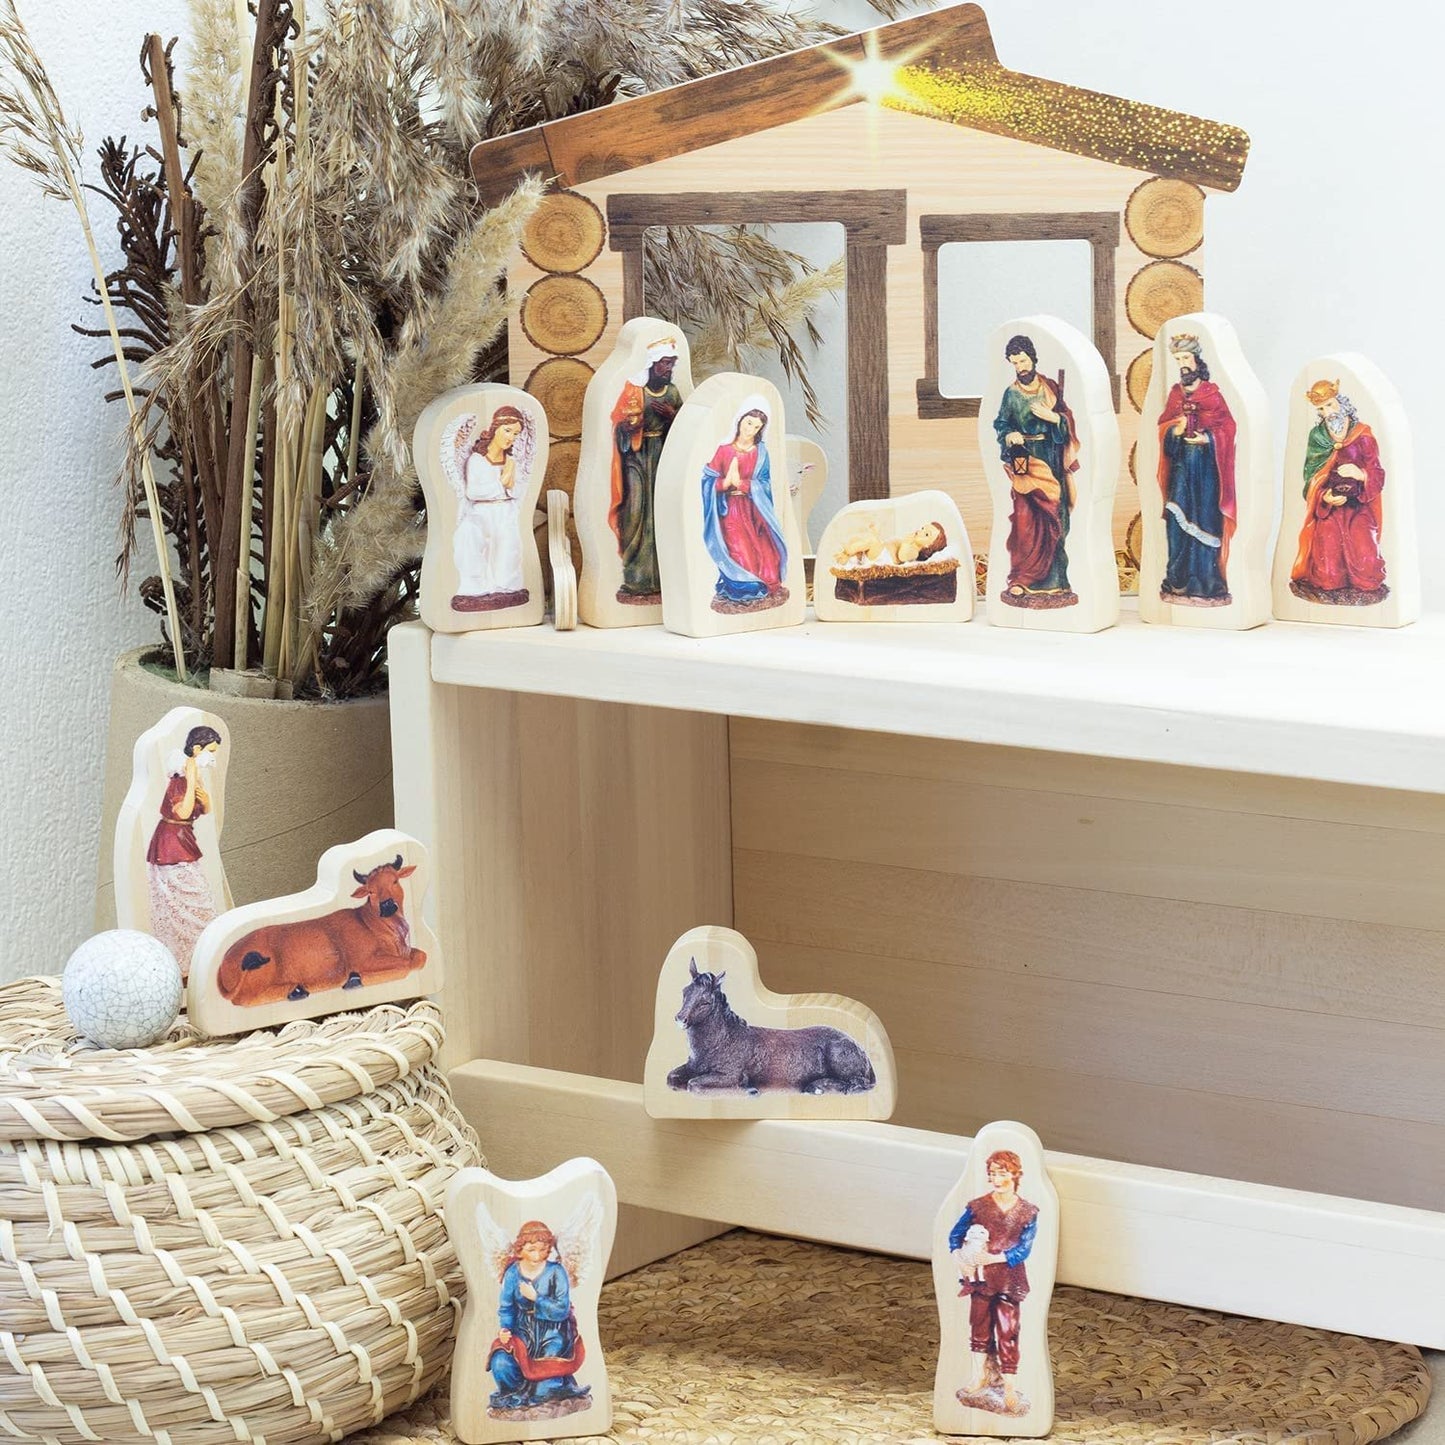 Ulanik Nativity Set Souvenir Wooden Figurines Christmas Story Decoration Manger Scene for Home Decor Indoor Display